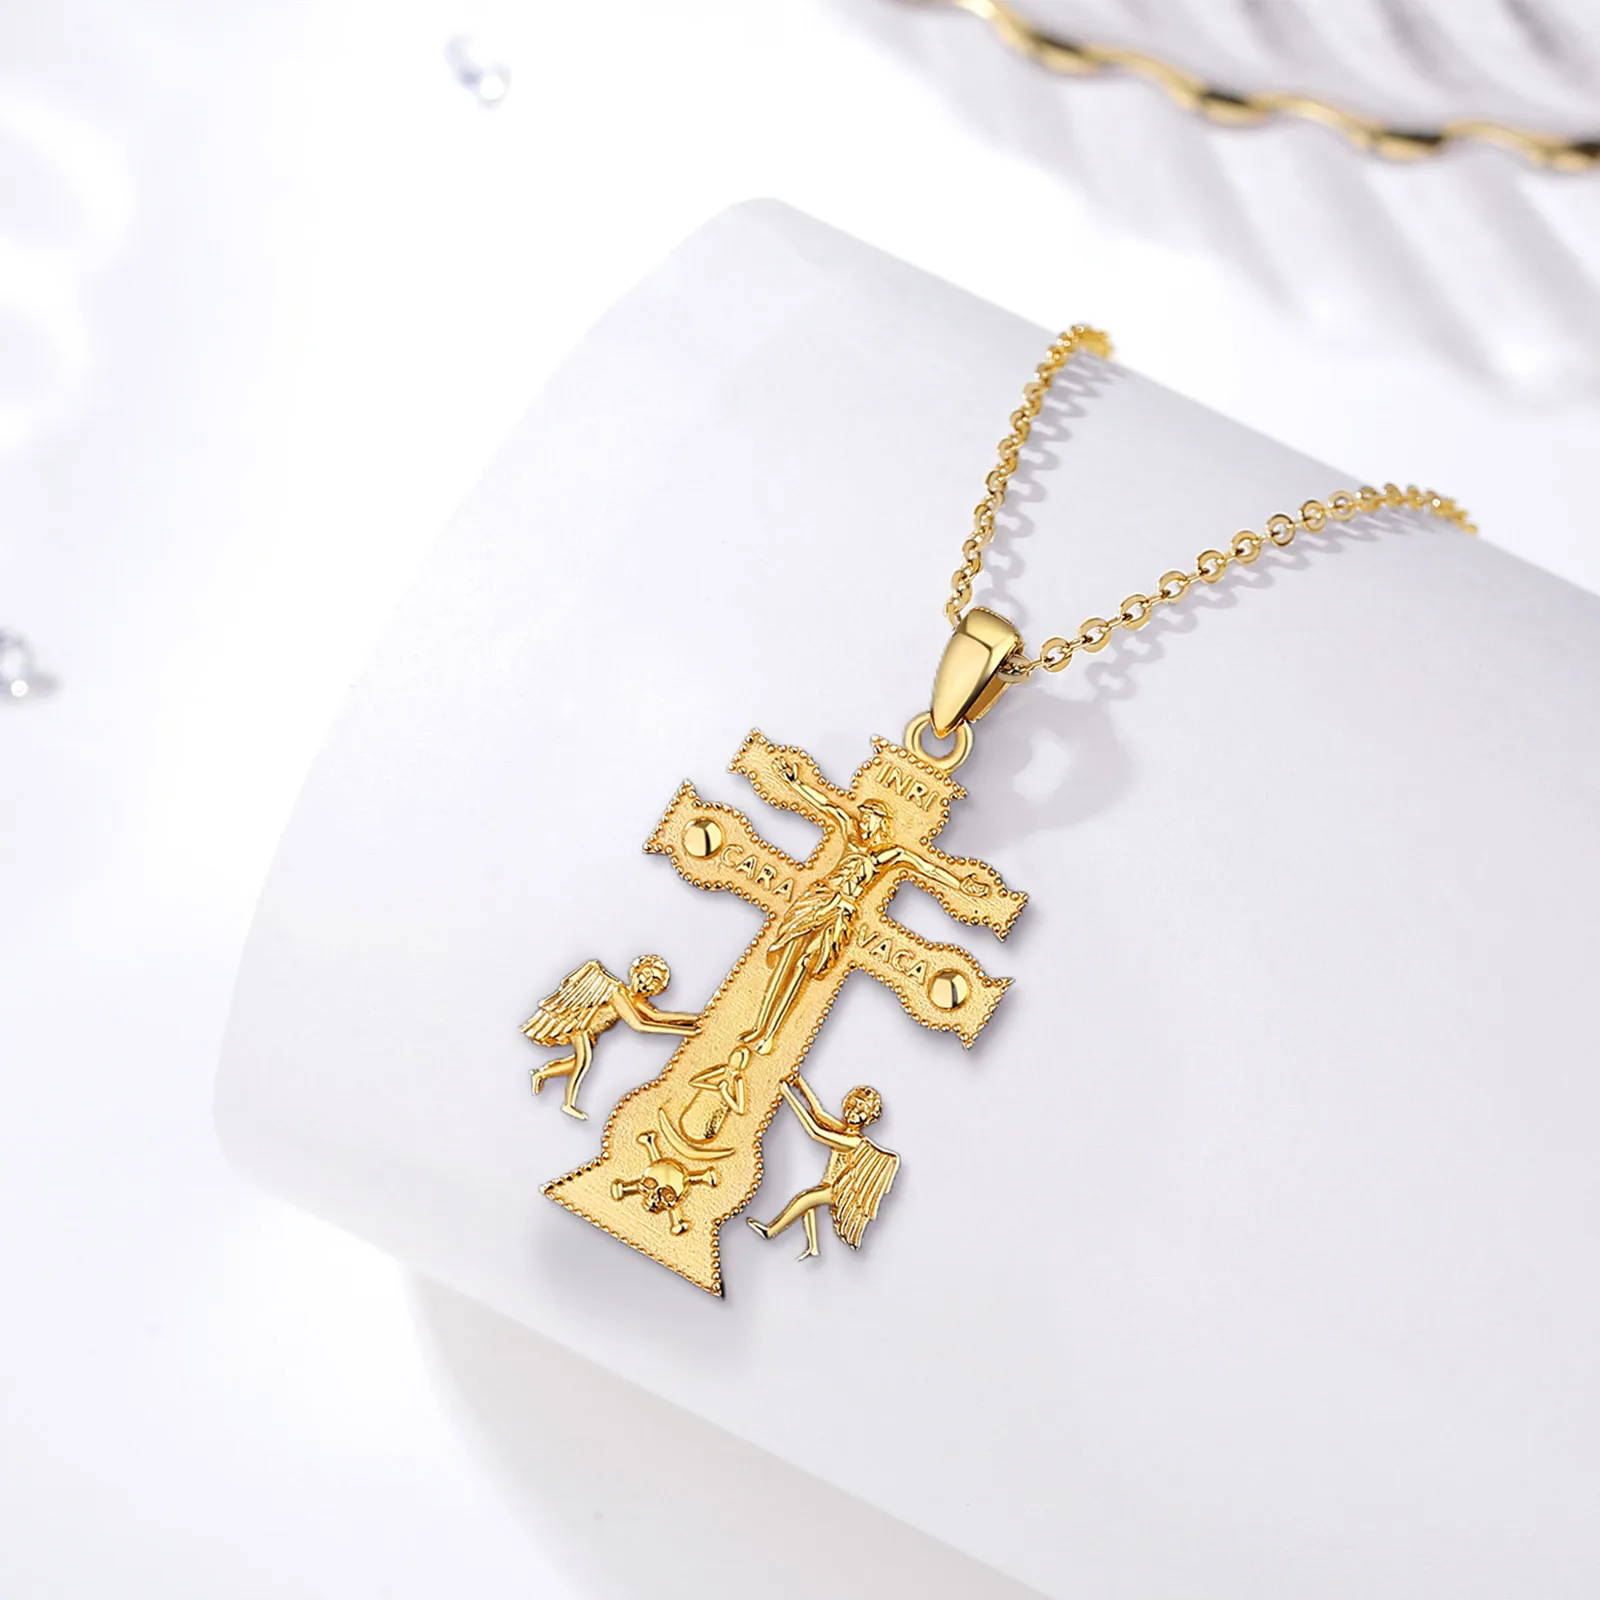 Eudora New 925 Sterling Silver Caravaca Cross Necklace 18K Gold Jesus Cross Pendant Men Women Religious Jewelry Exquisite Gift